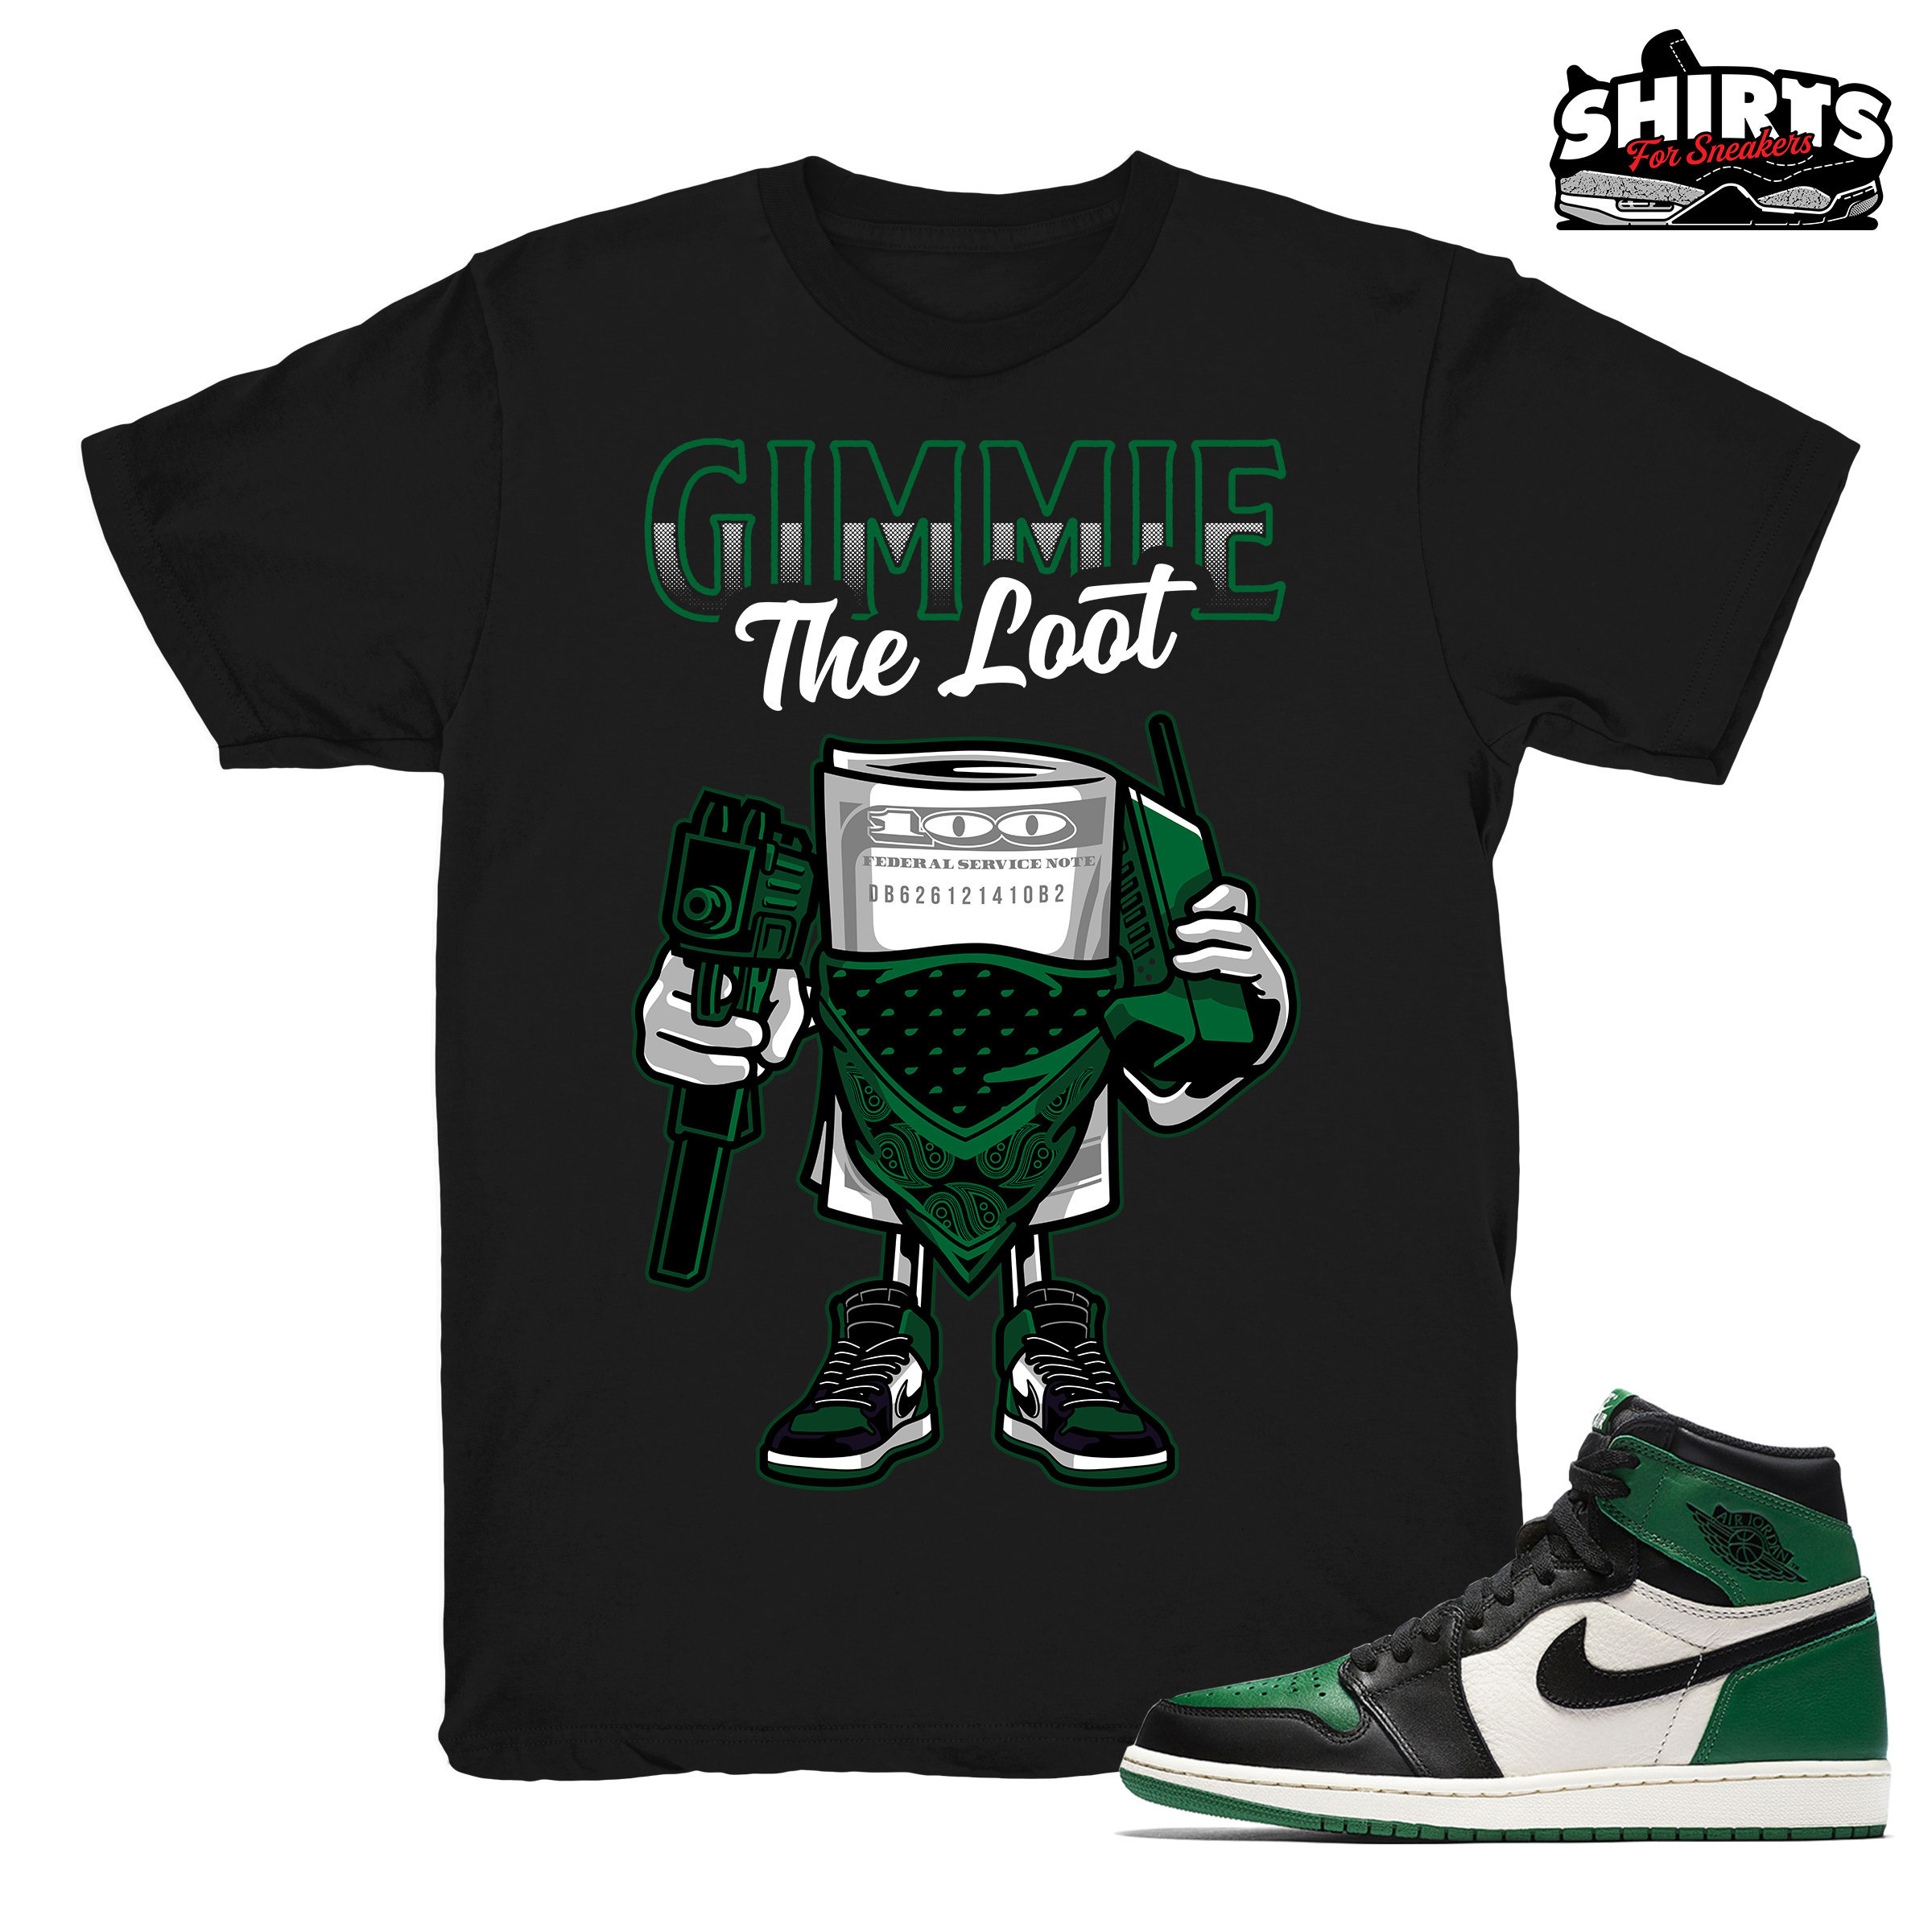 Pine Green 1 Shirt the Loot Retro 1 